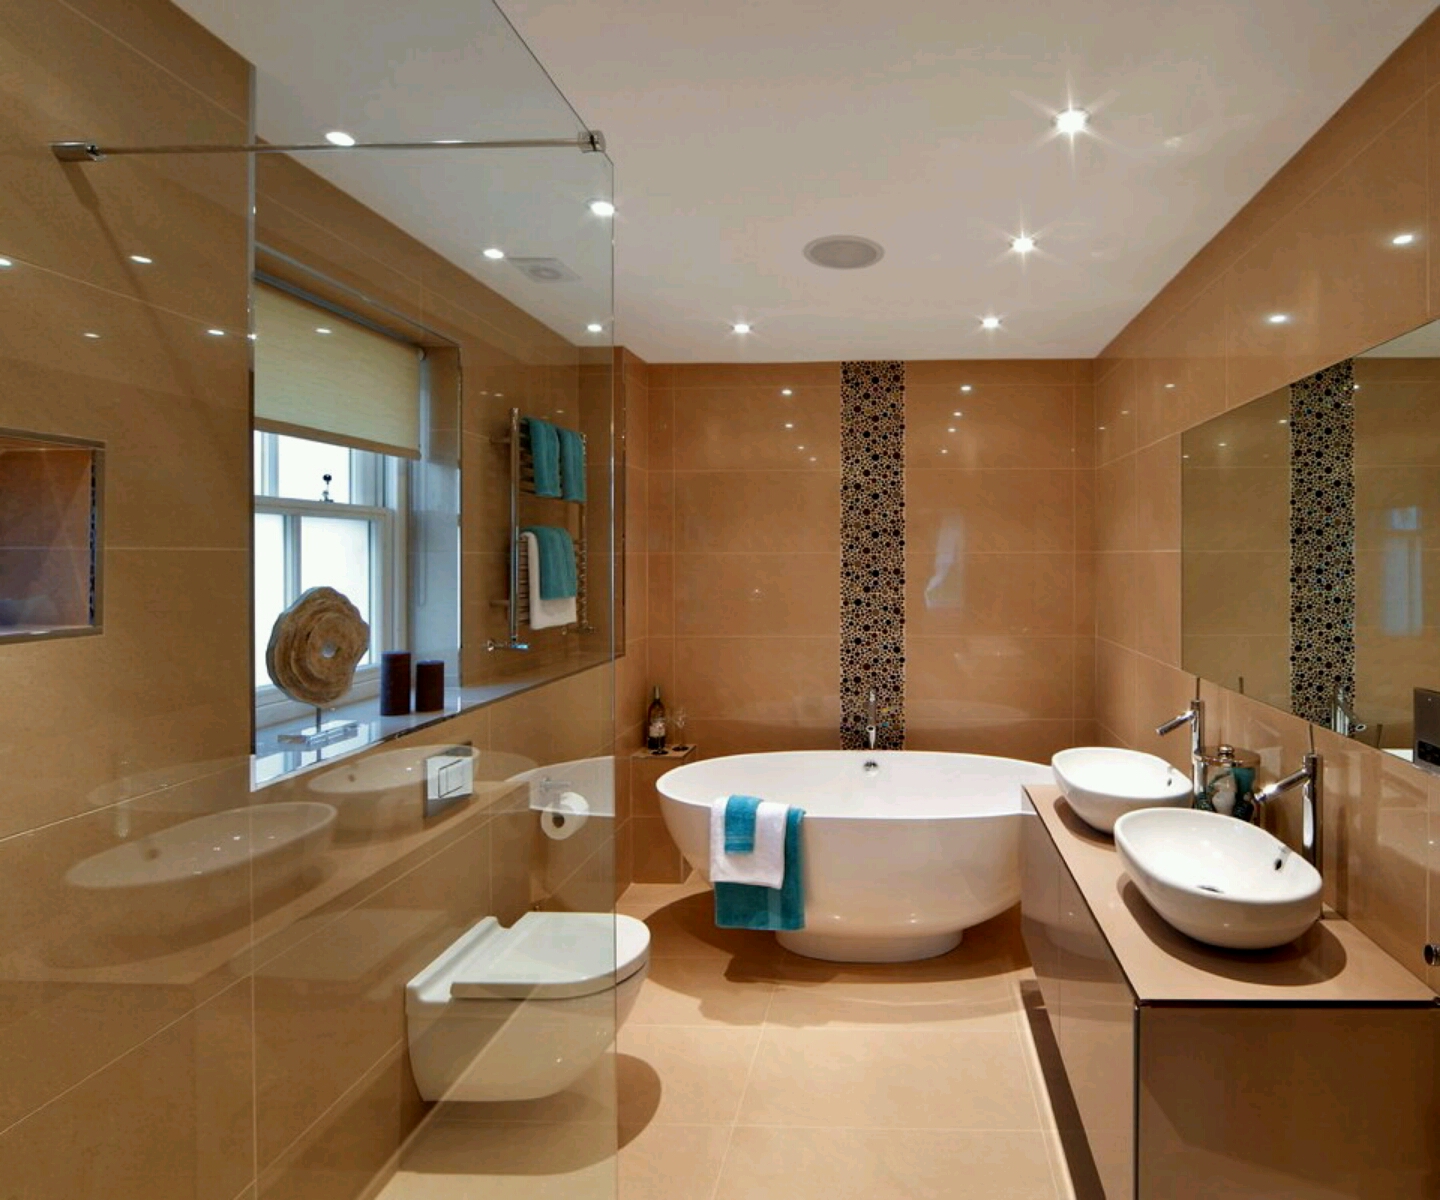 ... designs latest.: Luxury modern bathrooms designs decoration ideas